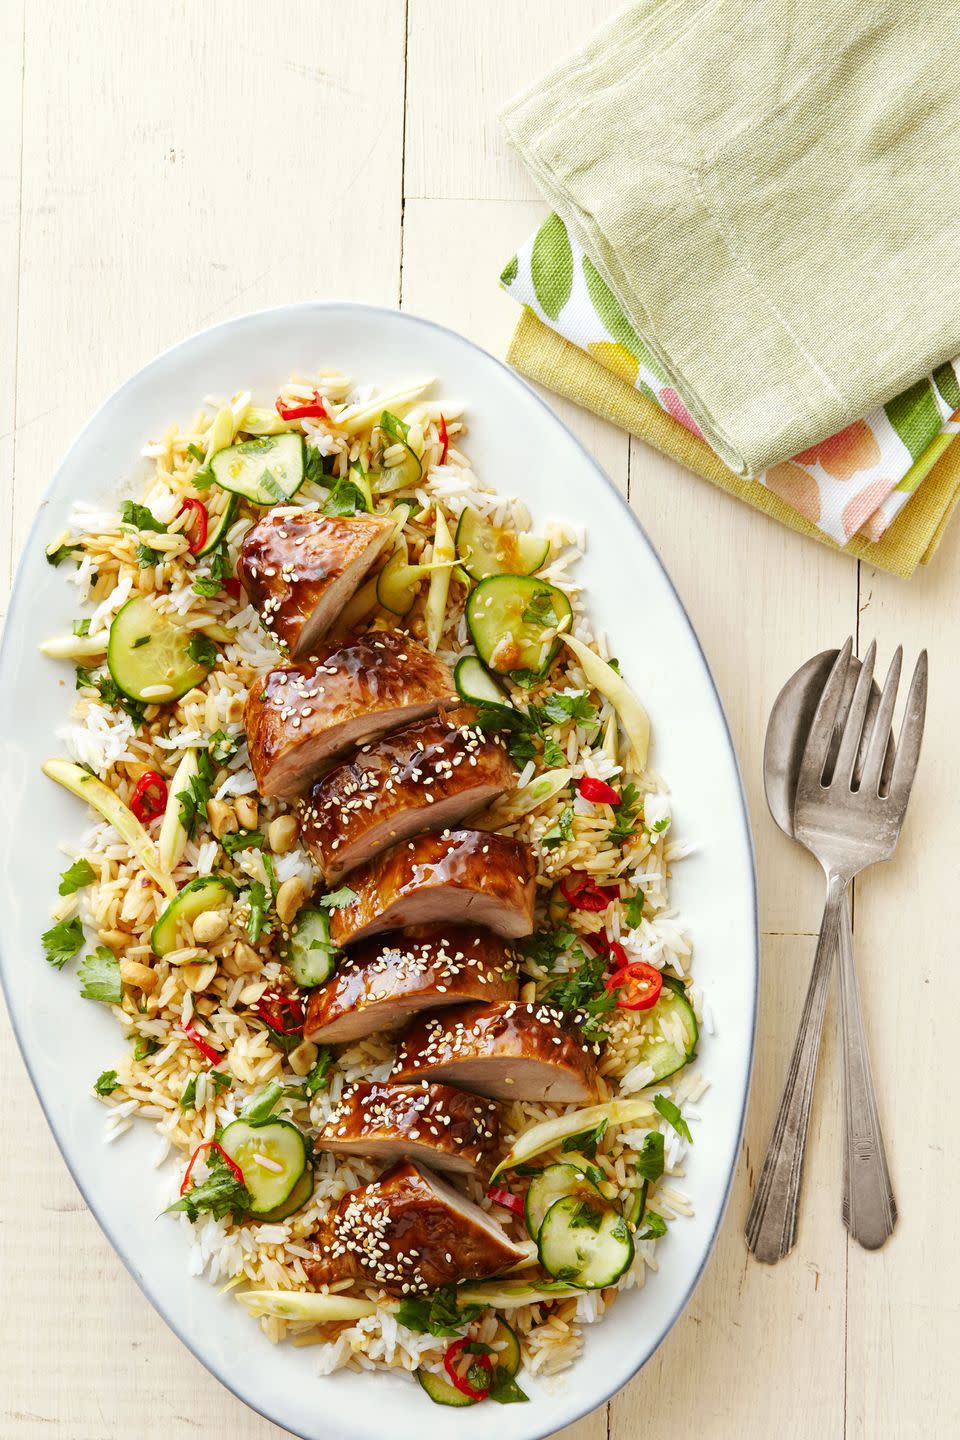 Hoisin-Glazed Pork Tenderloin with Asian Rice Salad